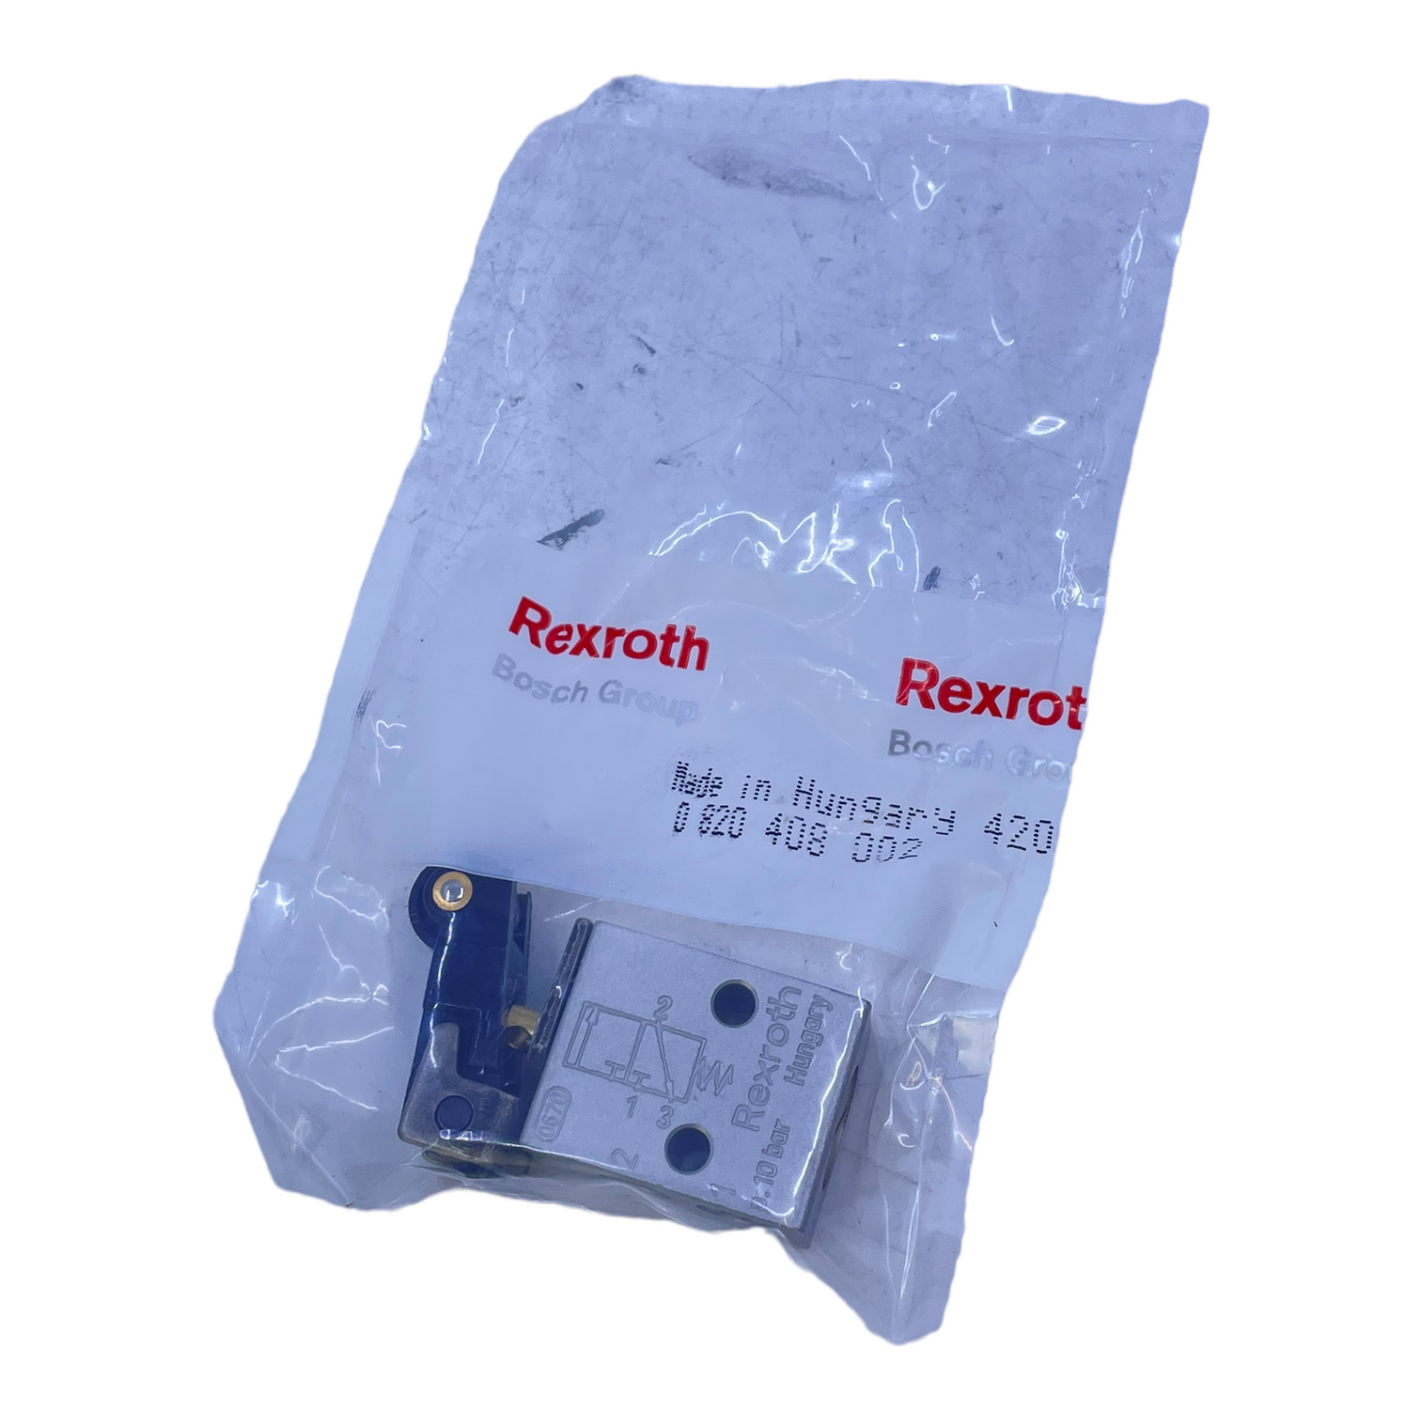 Rexroth 0 820 408 002 limit switch 10 bar